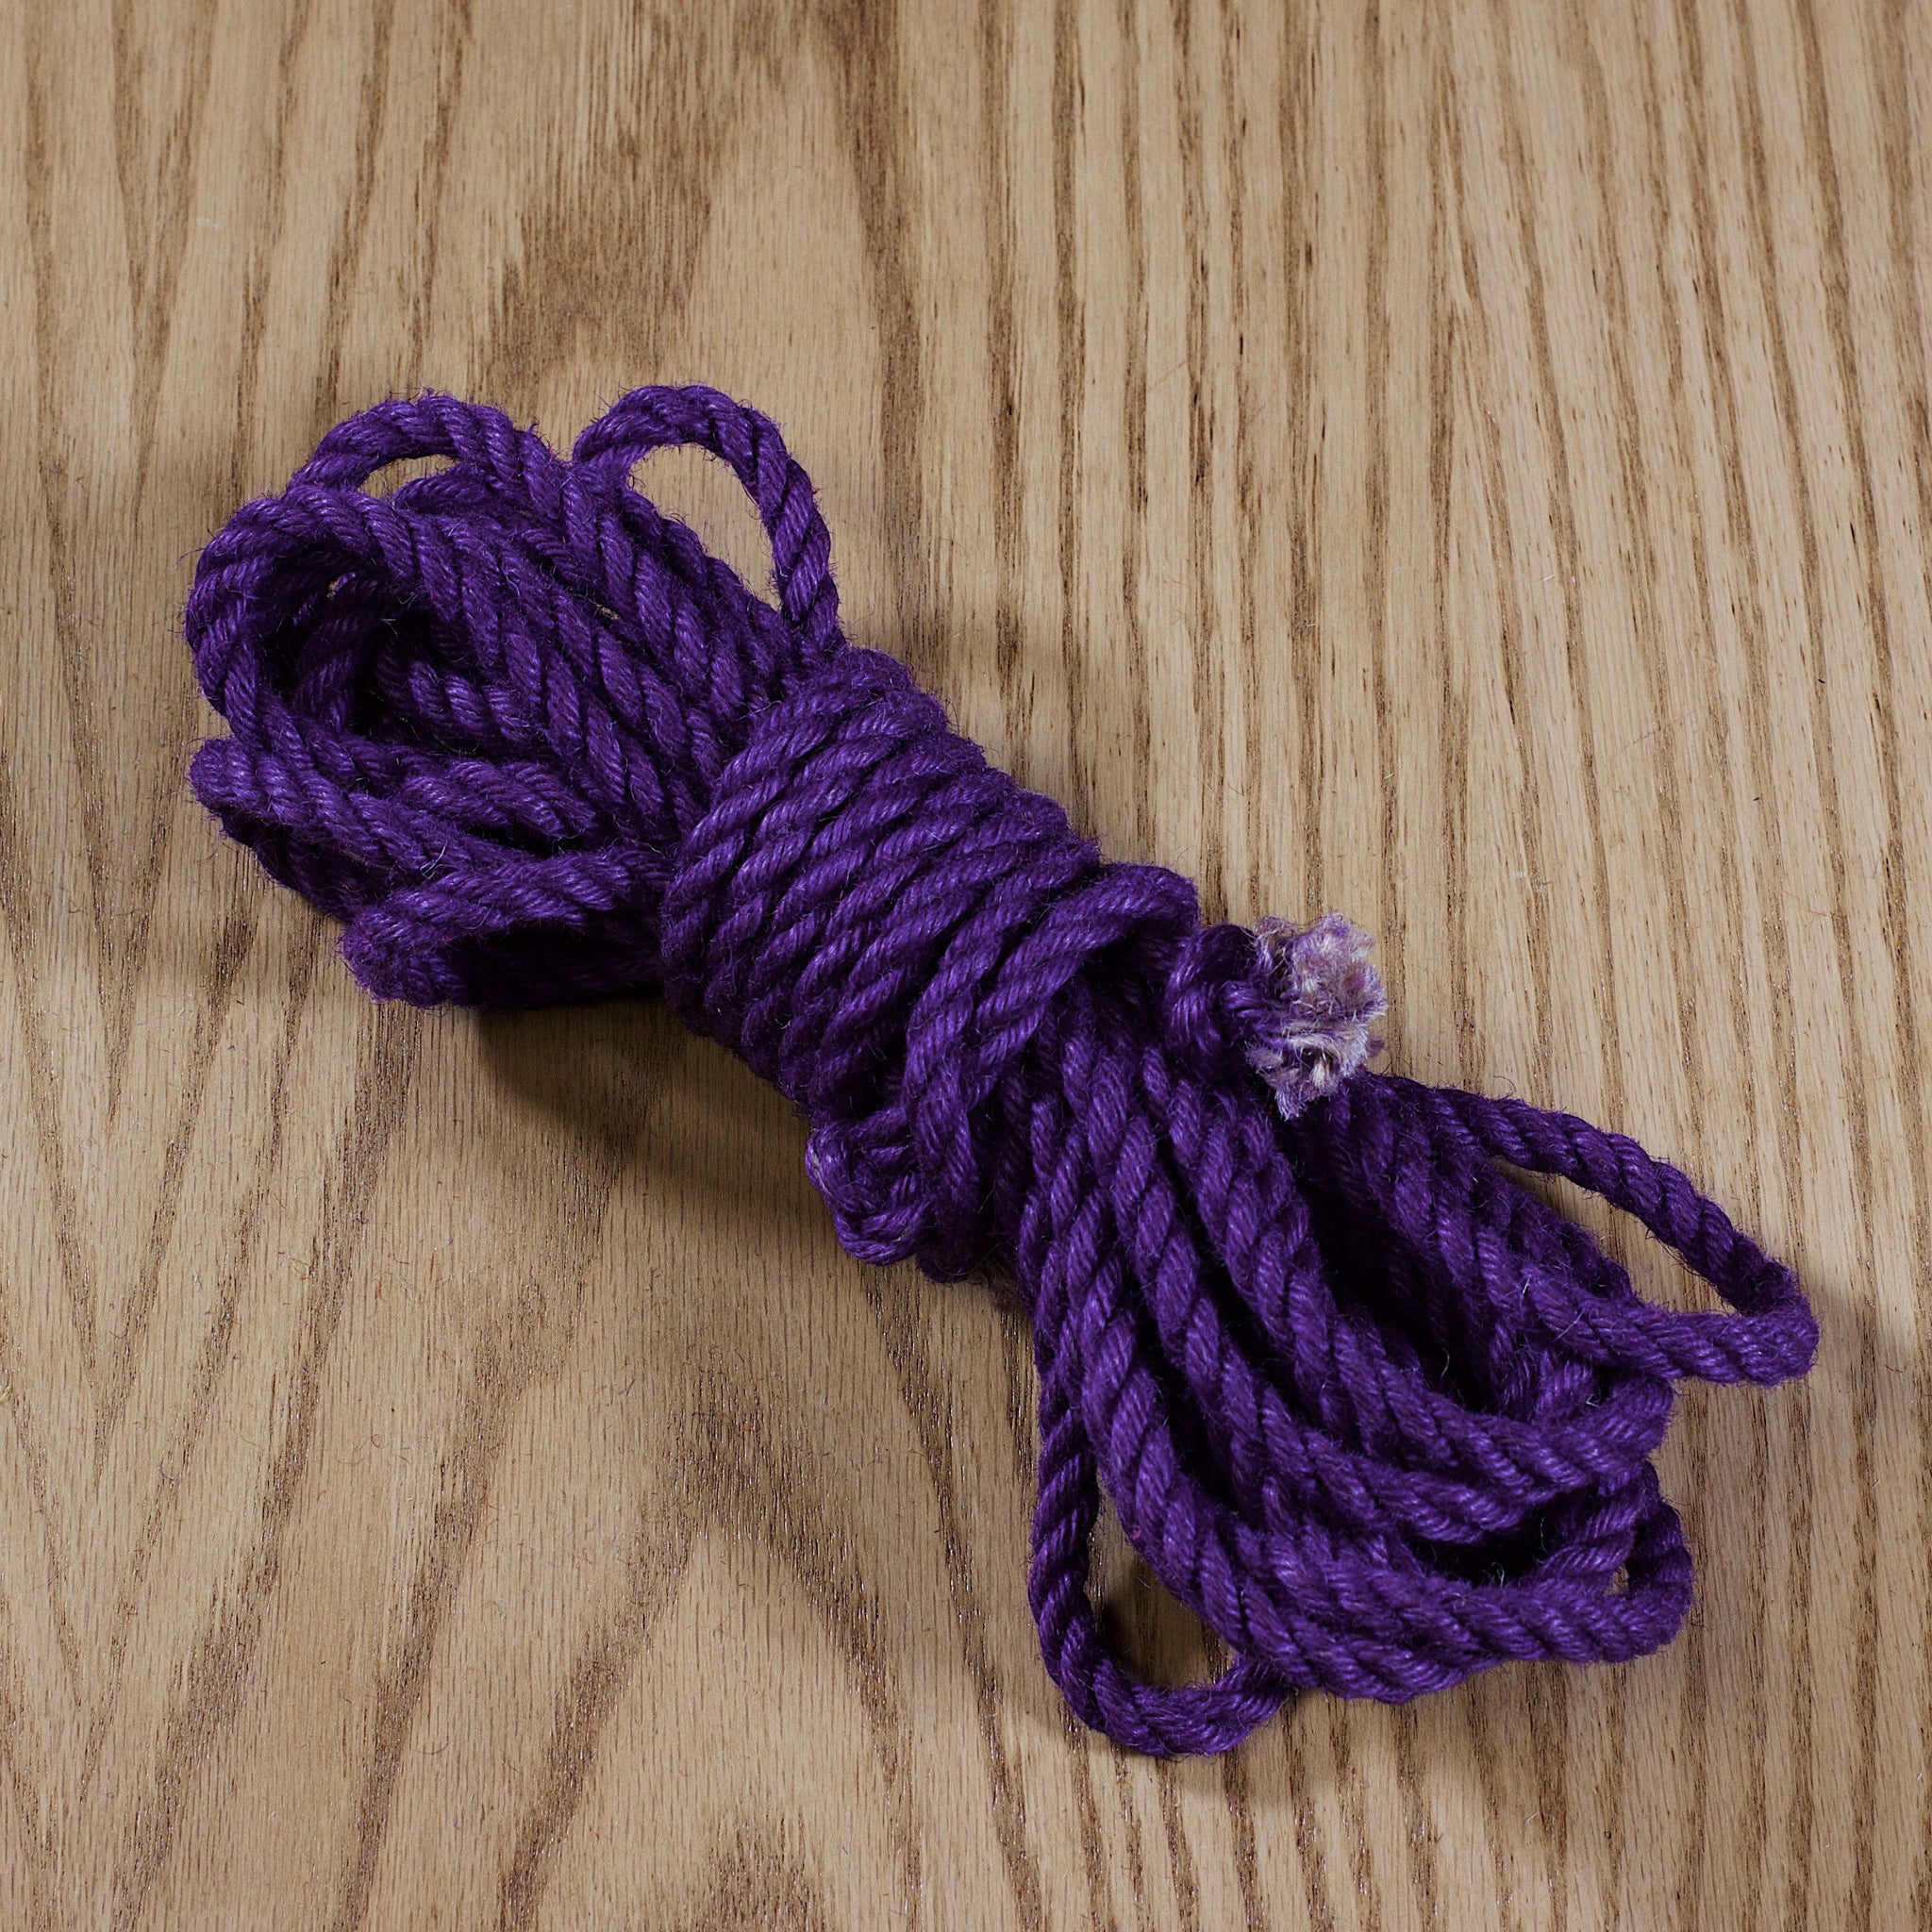 Ogawa Jute Rope, Treated (1 Rope) - Purple - Tensionmtl